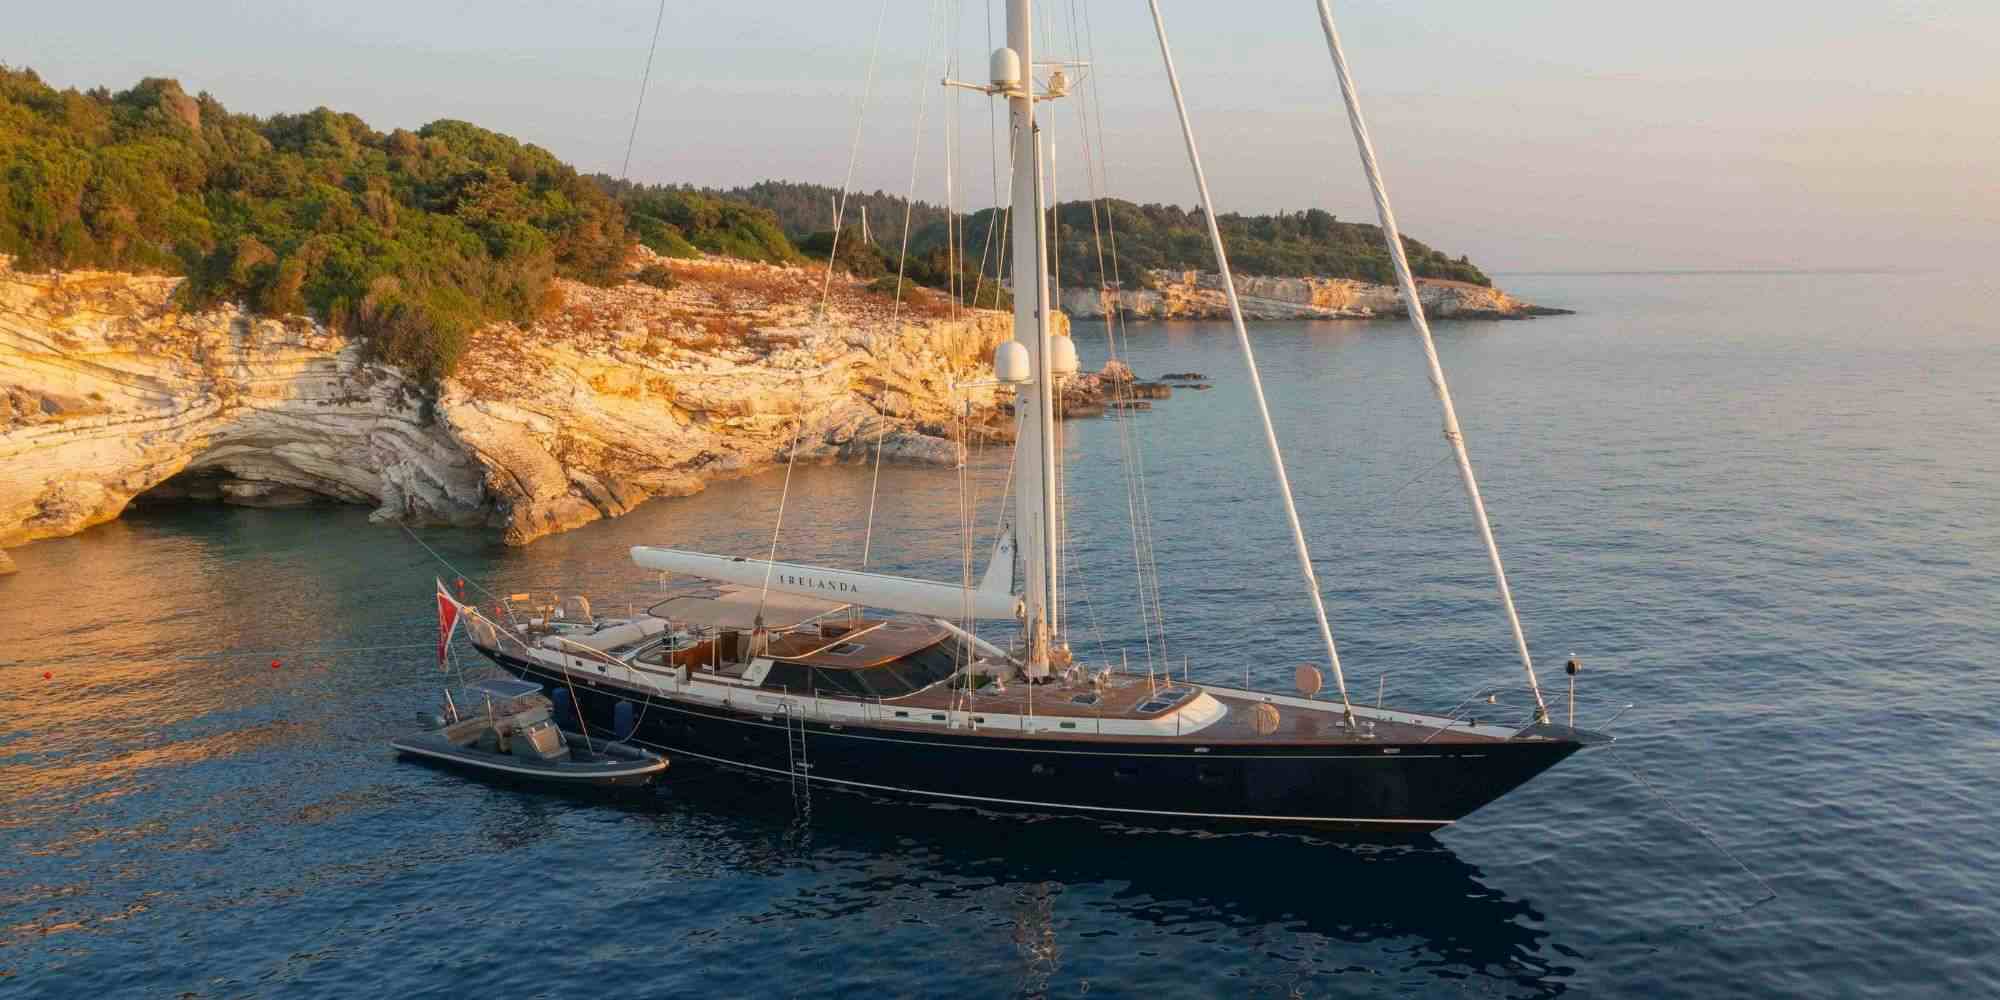 IRELANDA - Yacht Charter Talamone & Boat hire in W. Med -Naples/Sicily, Greece, W. Med -Riviera/Cors/Sard., Turkey, Croatia | Winter: Caribbean Virgin Islands (US/BVI), Caribbean Leewards, Caribbean Windwards 1